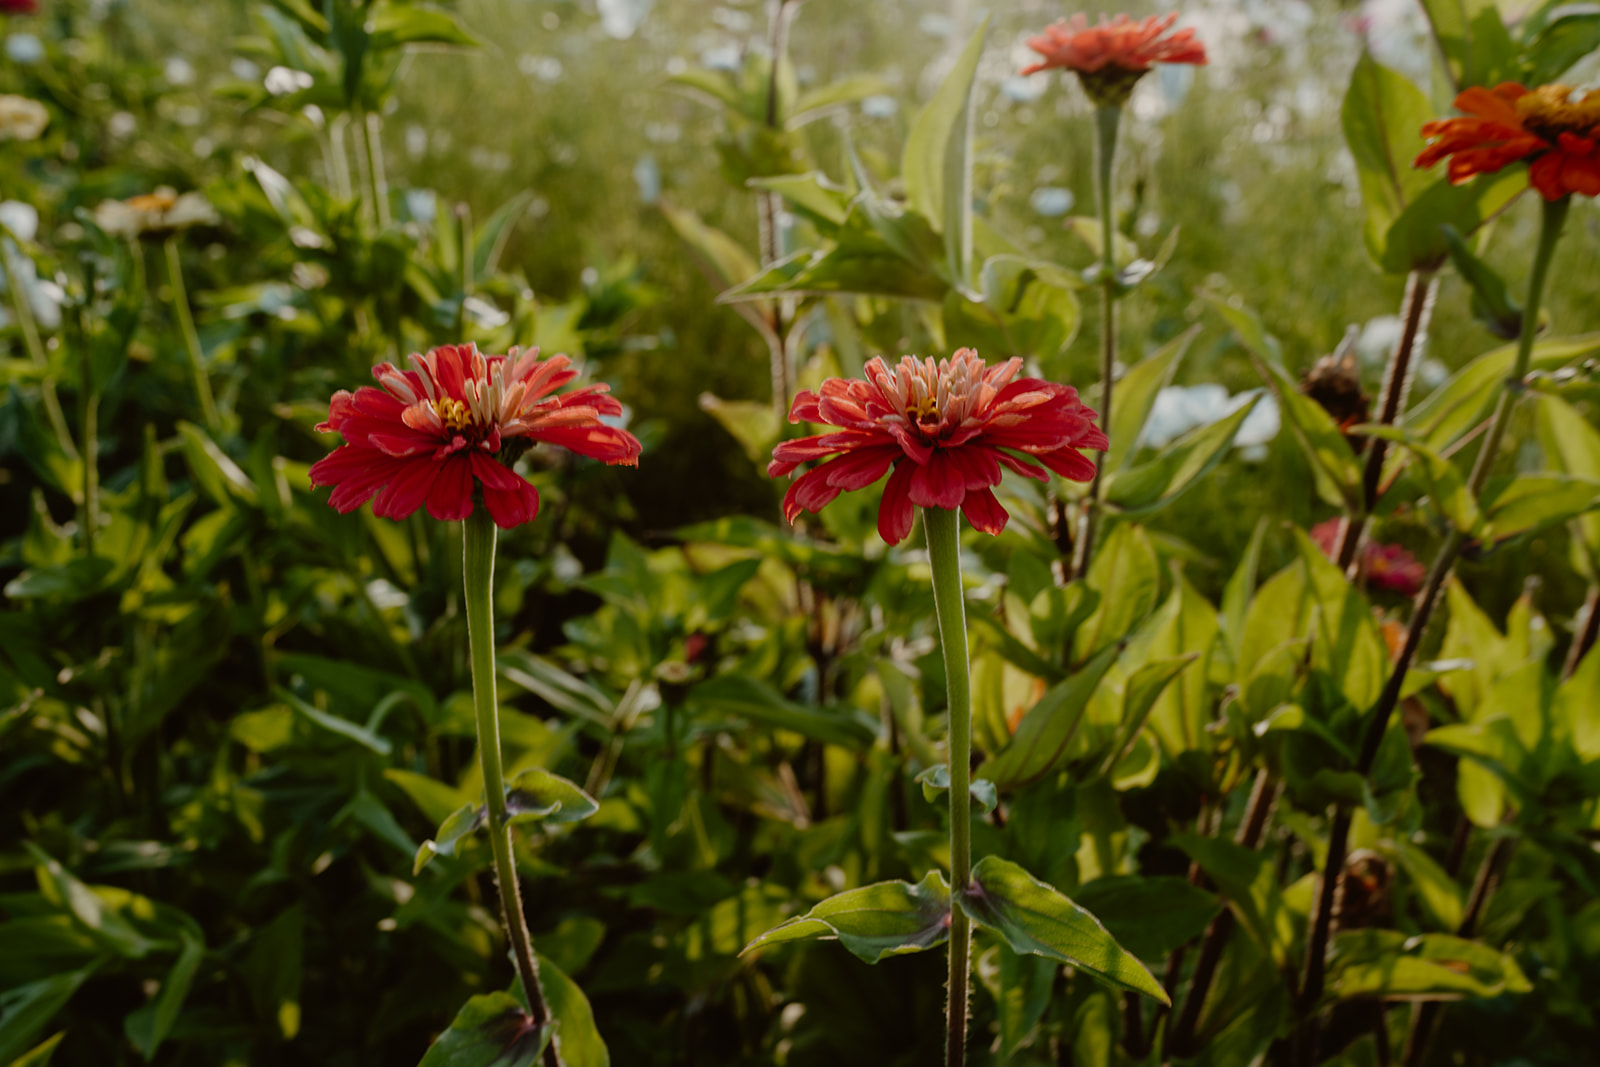 Close up of Zinnia flowers